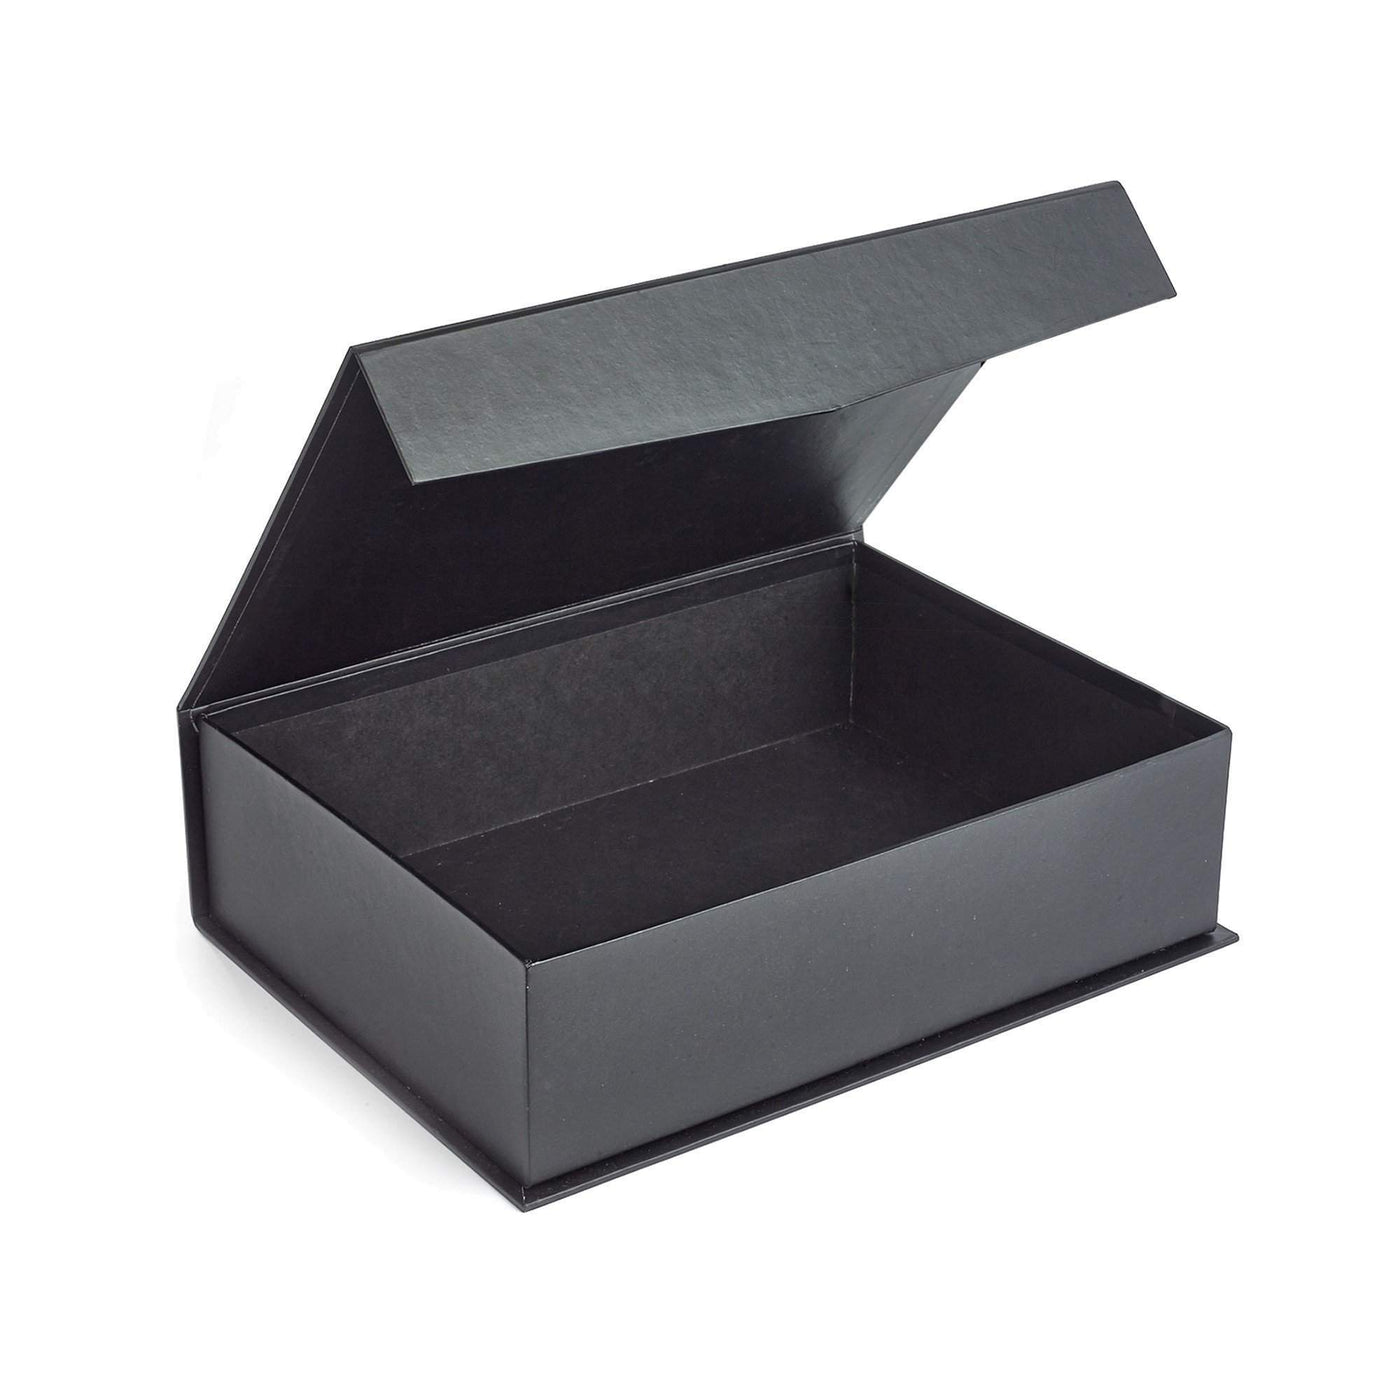 Gift Box-Worry Less Design-Black,Gift-Box